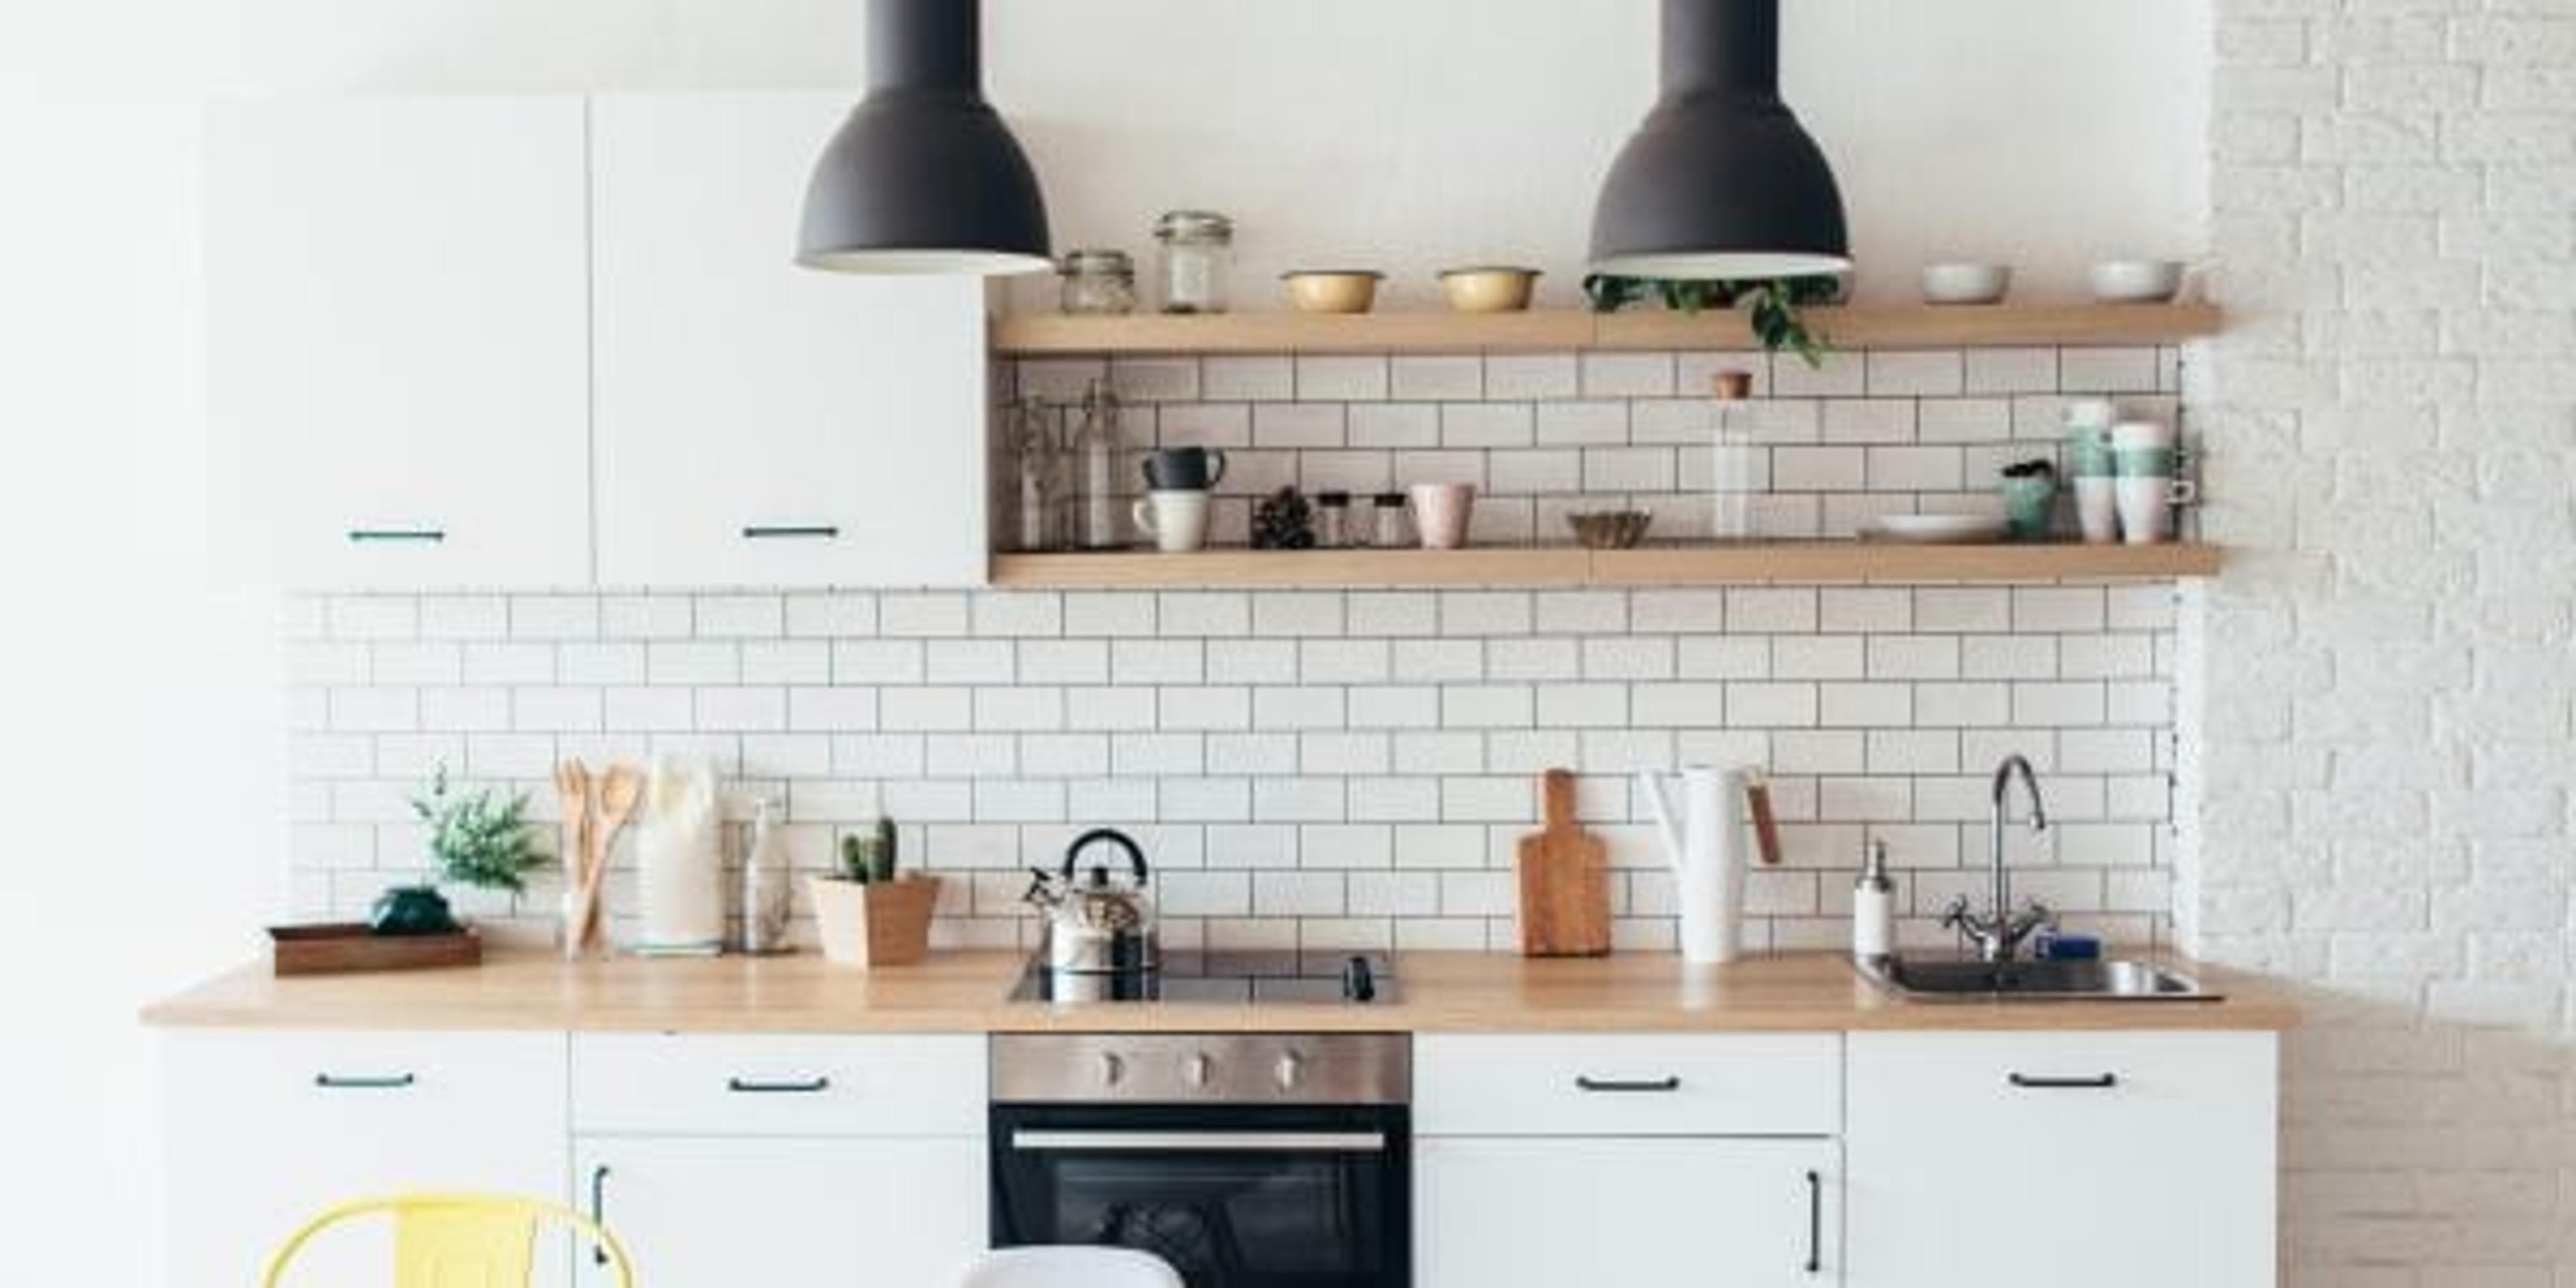 Image of a modern, organized kitchen.